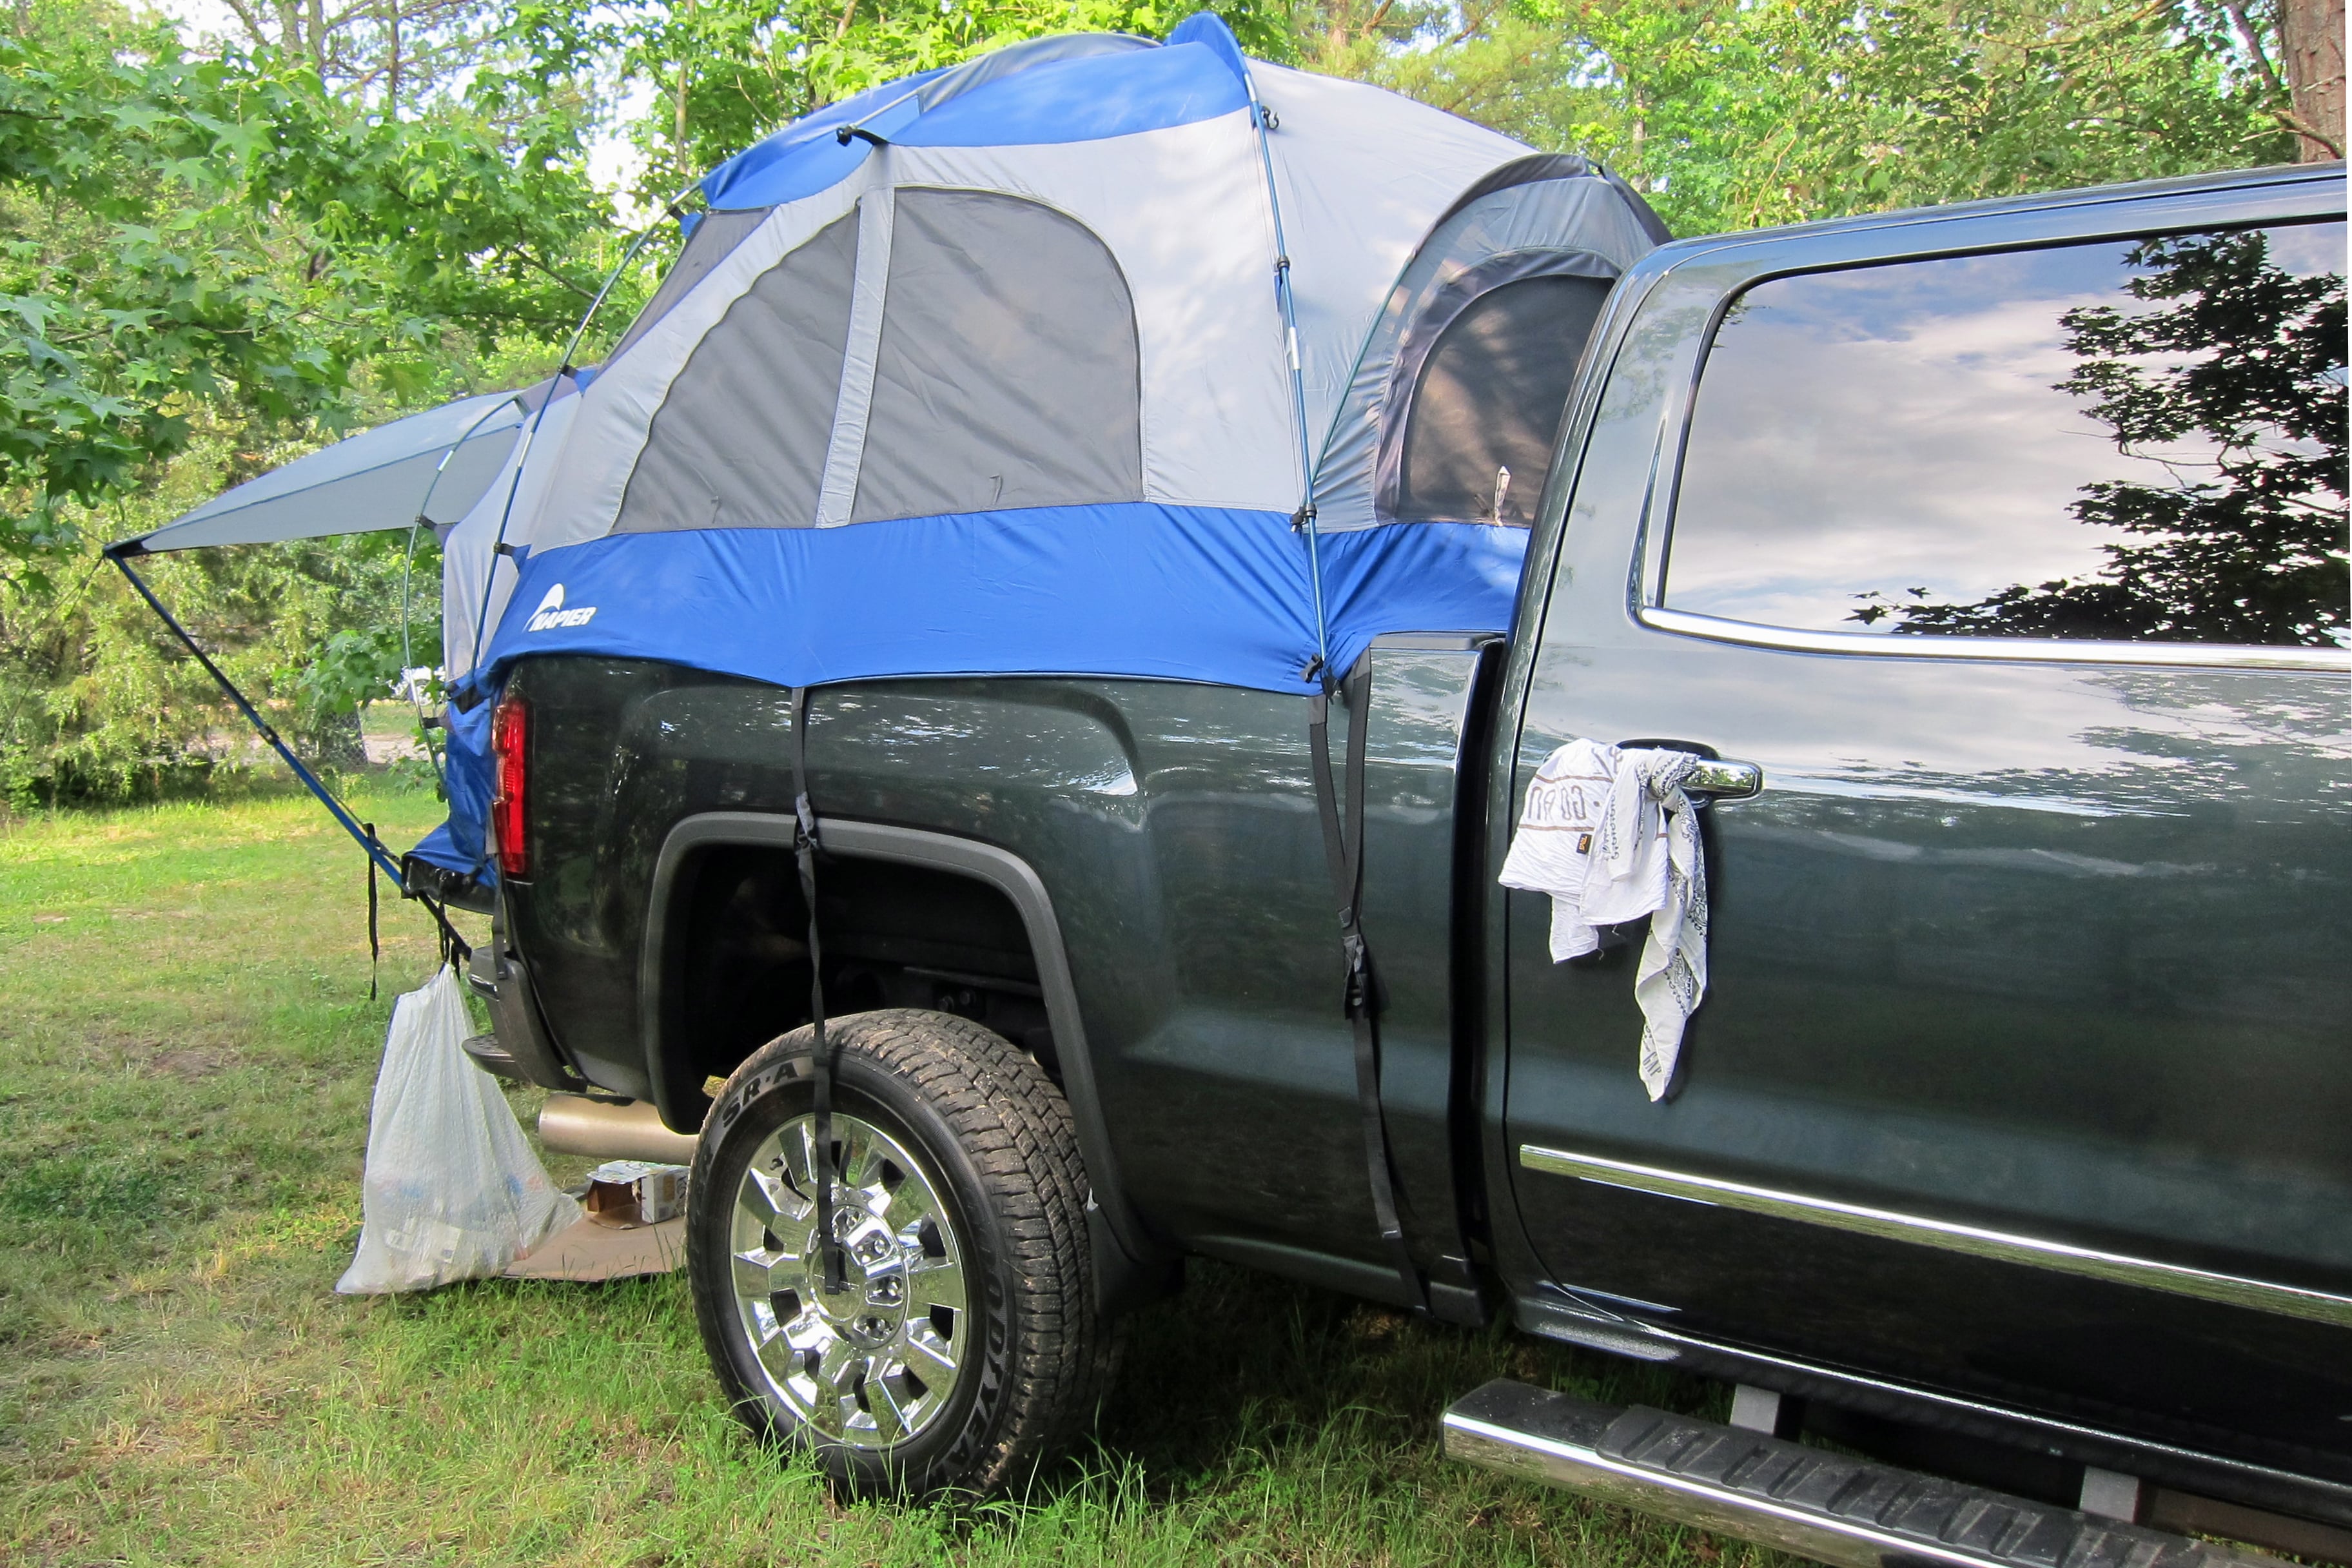 GMC Sierra Denali Pickup Truck Camping Kit Review | POPSUGAR Smart